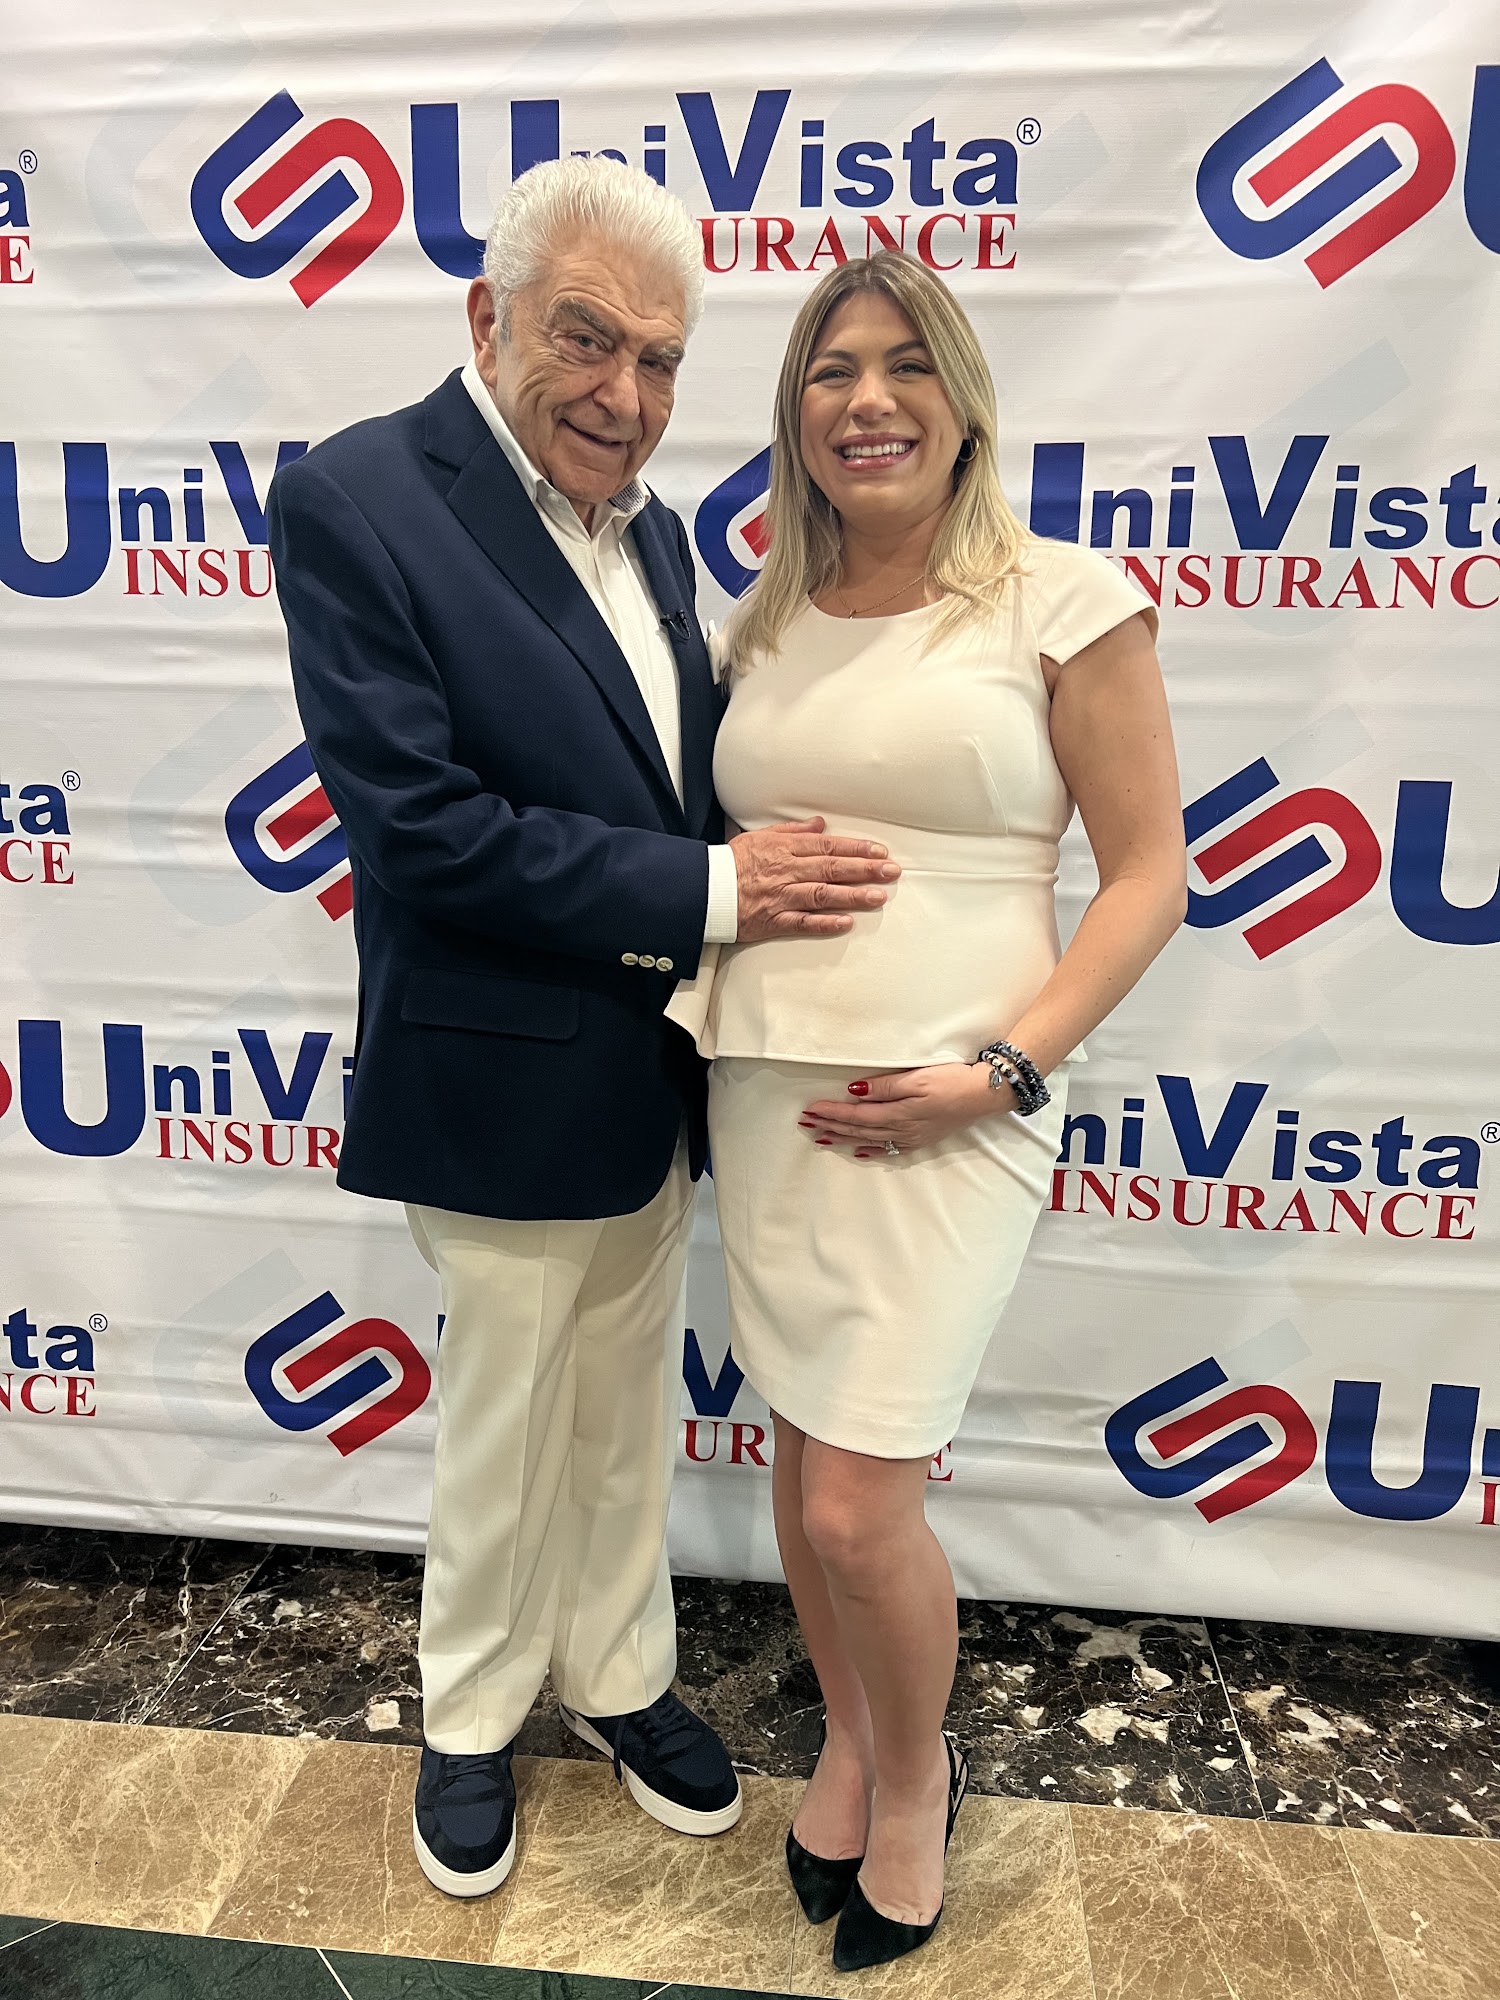 UniVista Insurance - Joanna Hernandez